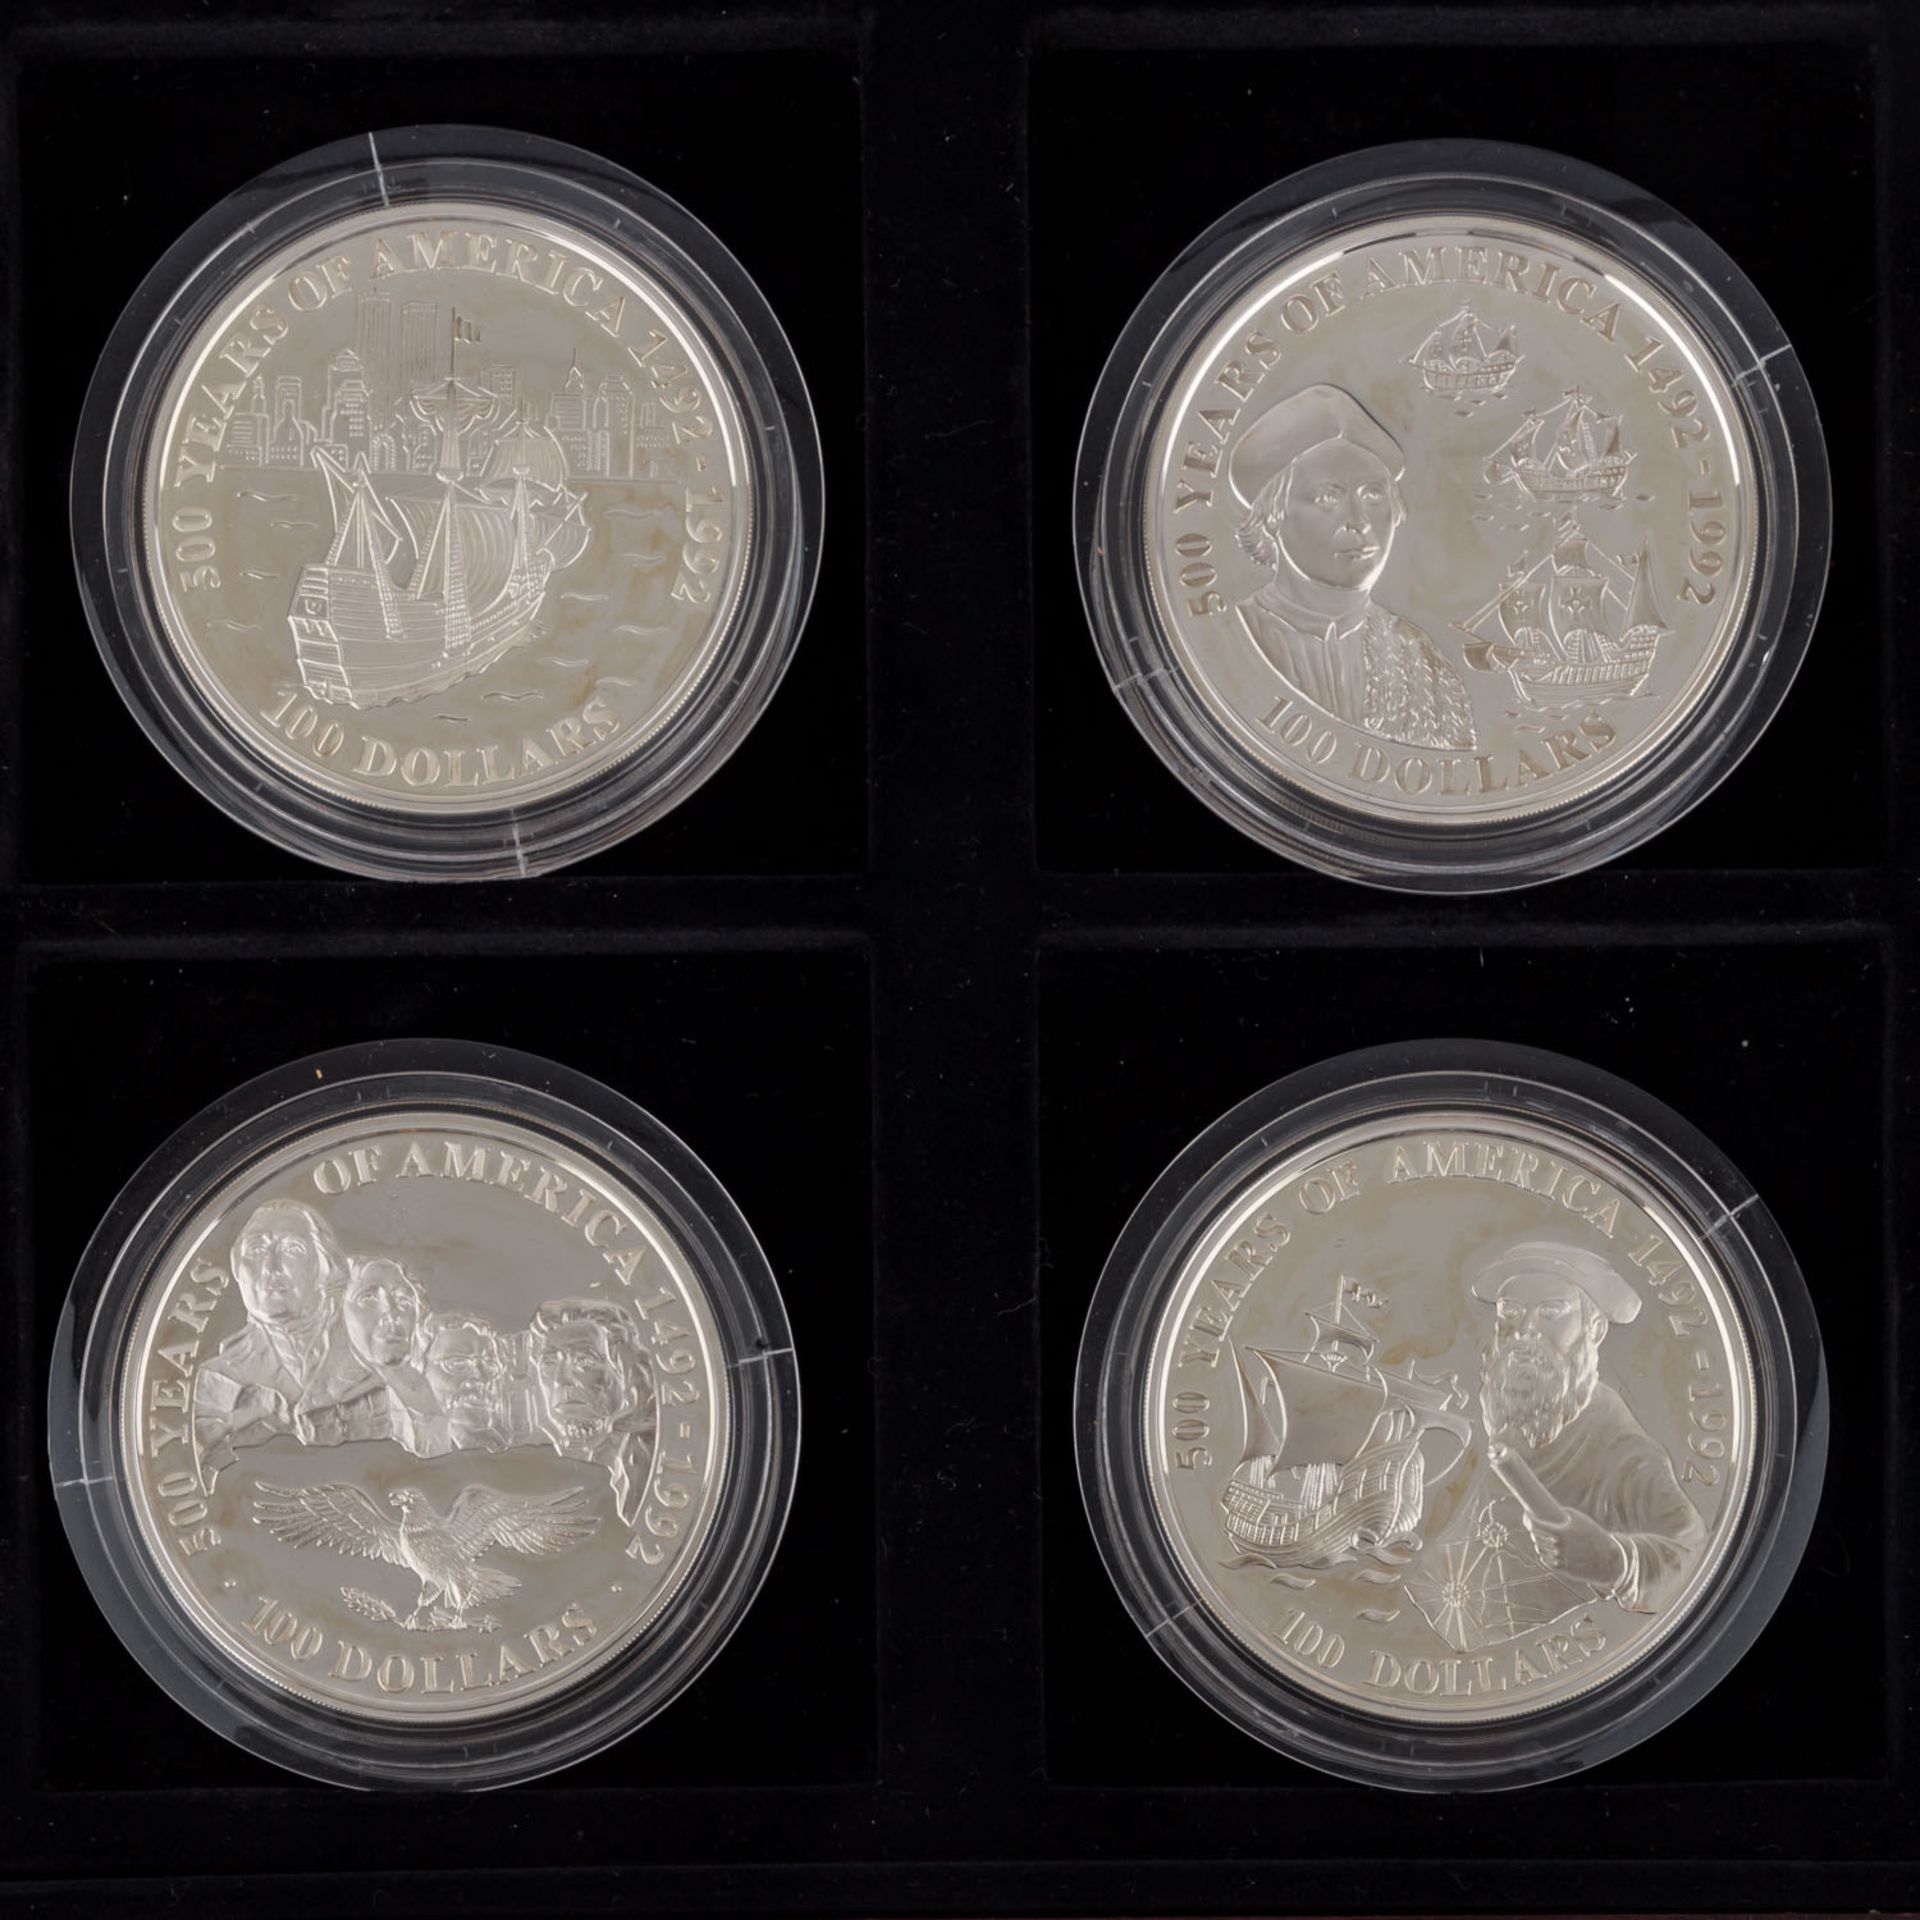 Cookinseln Serie 500 Years of America - 4 x 100 Dollars 1990-1993,je 5 Unzen fein, PP, verkapselt. - Bild 3 aus 3